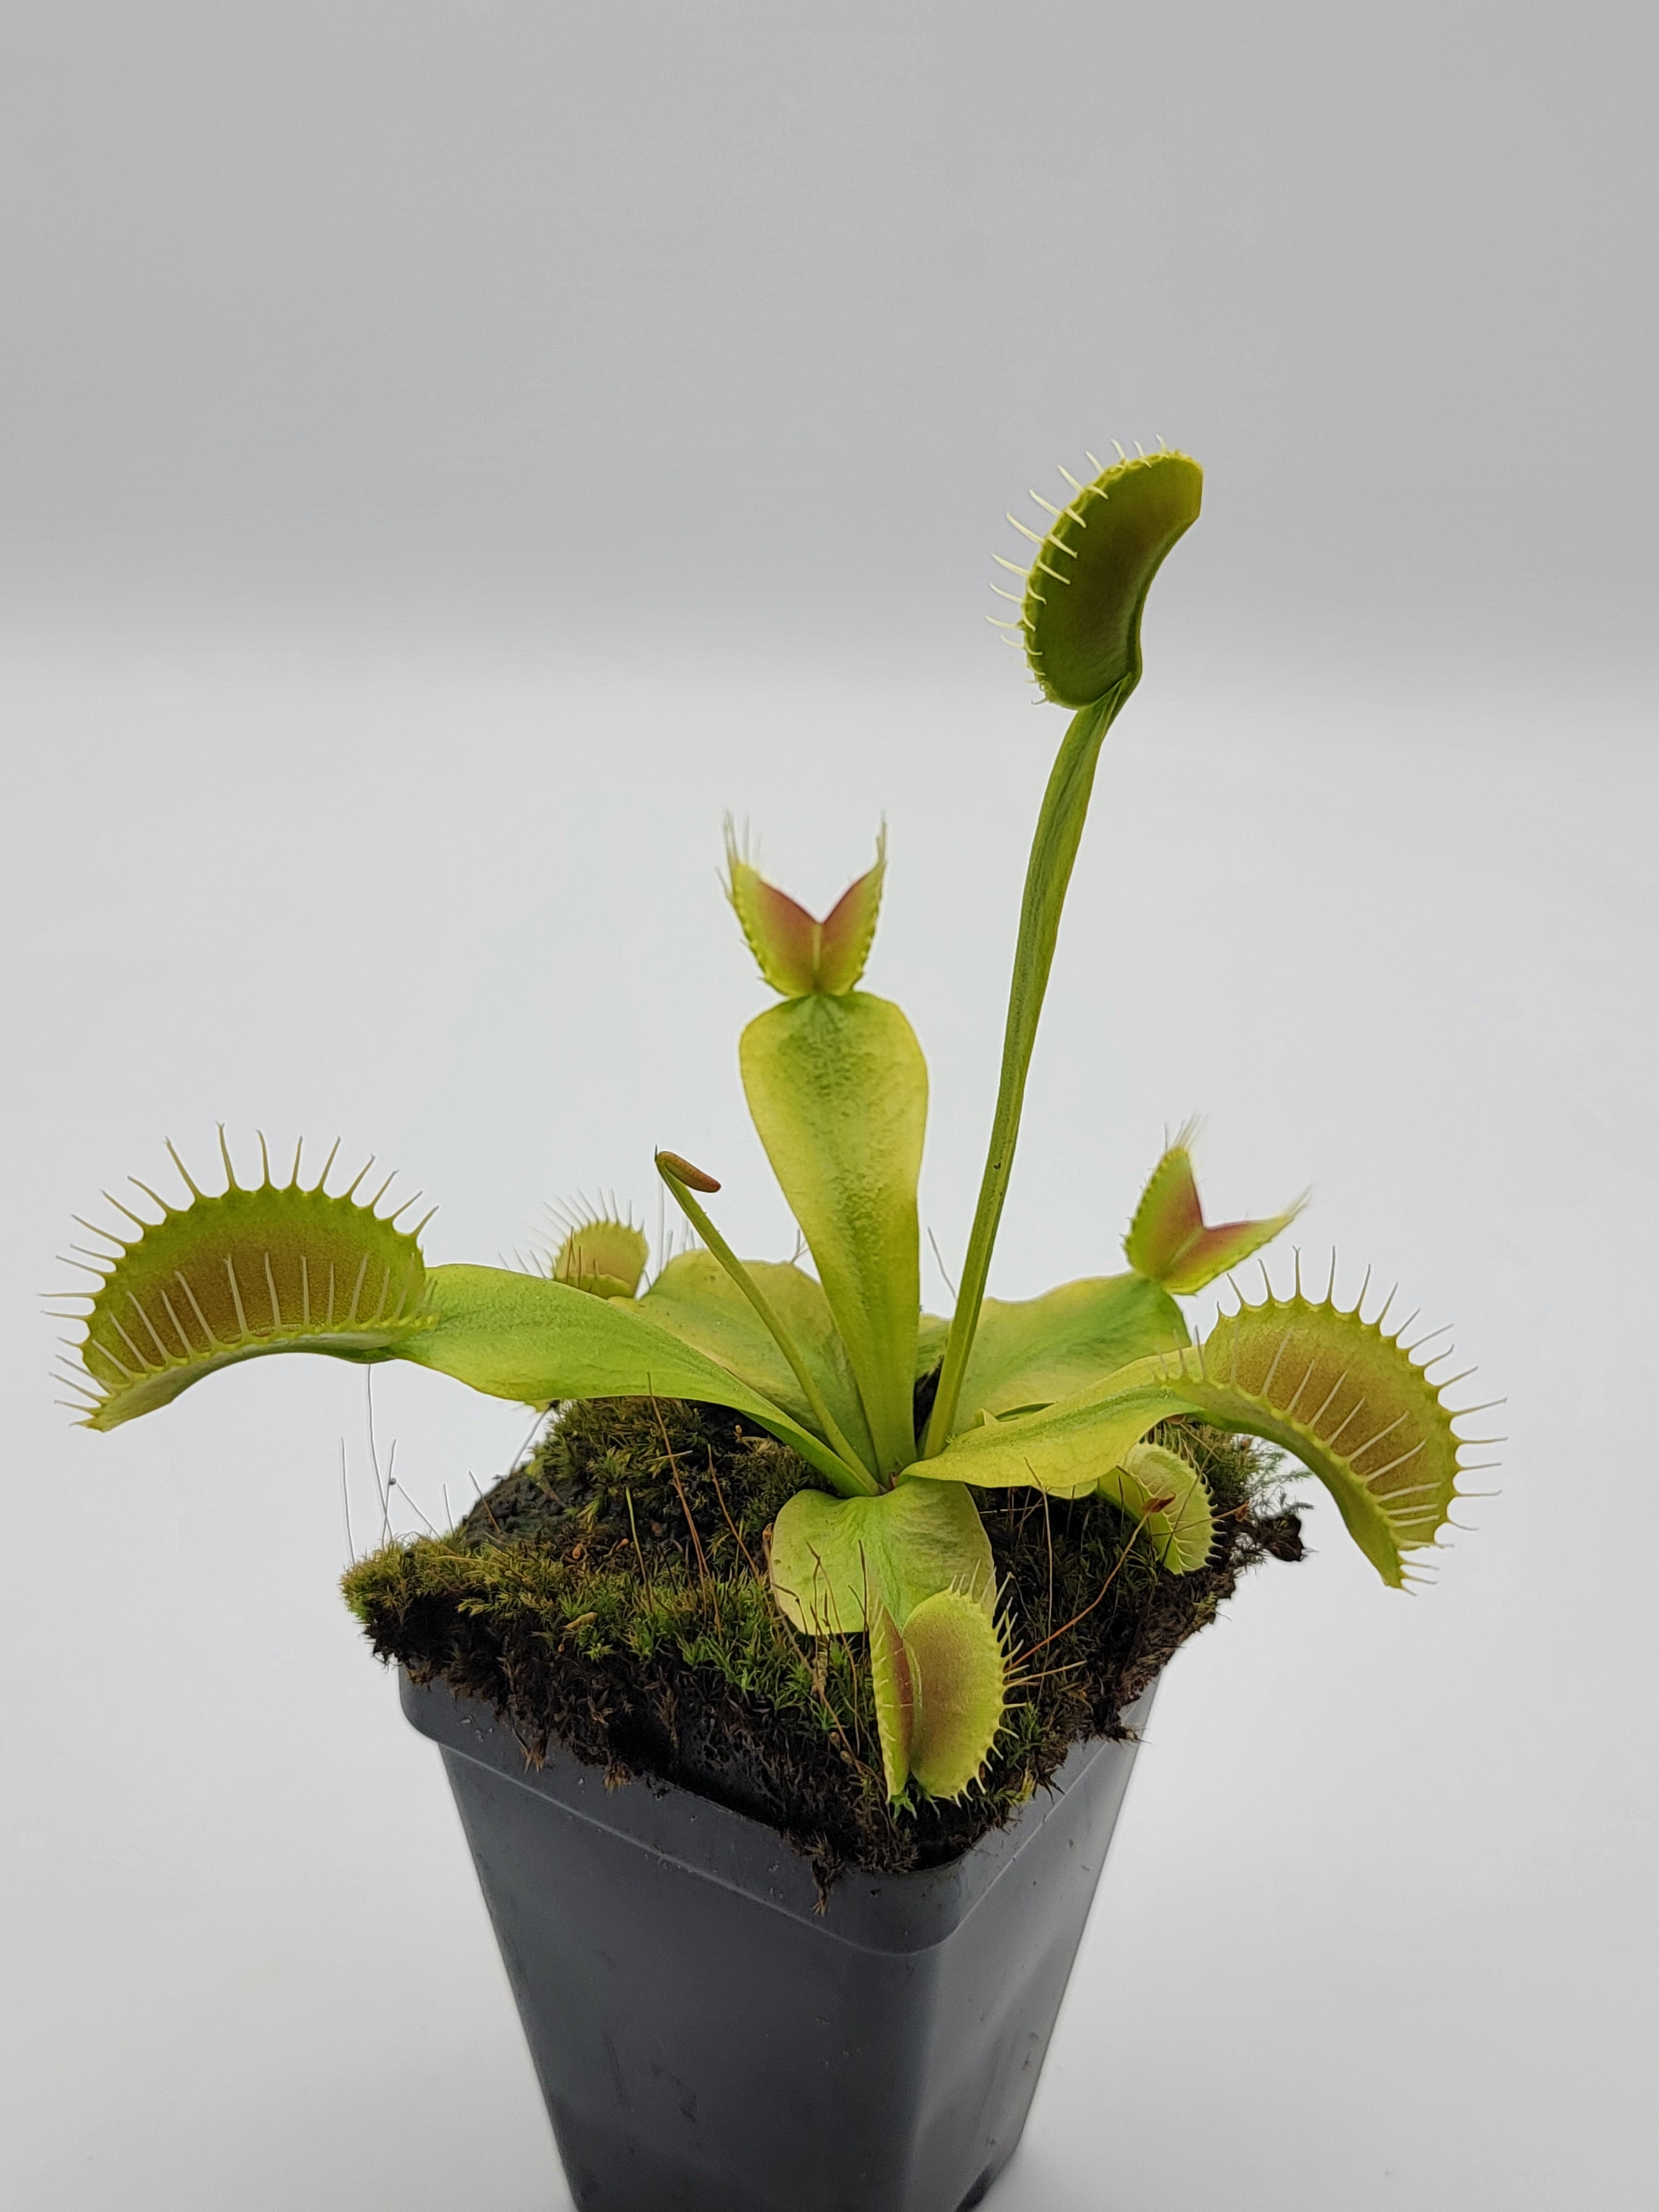 Venus flytrap (Dionaea muscipula) "King Henry" - Rainbow Carnivorous Plants LLC